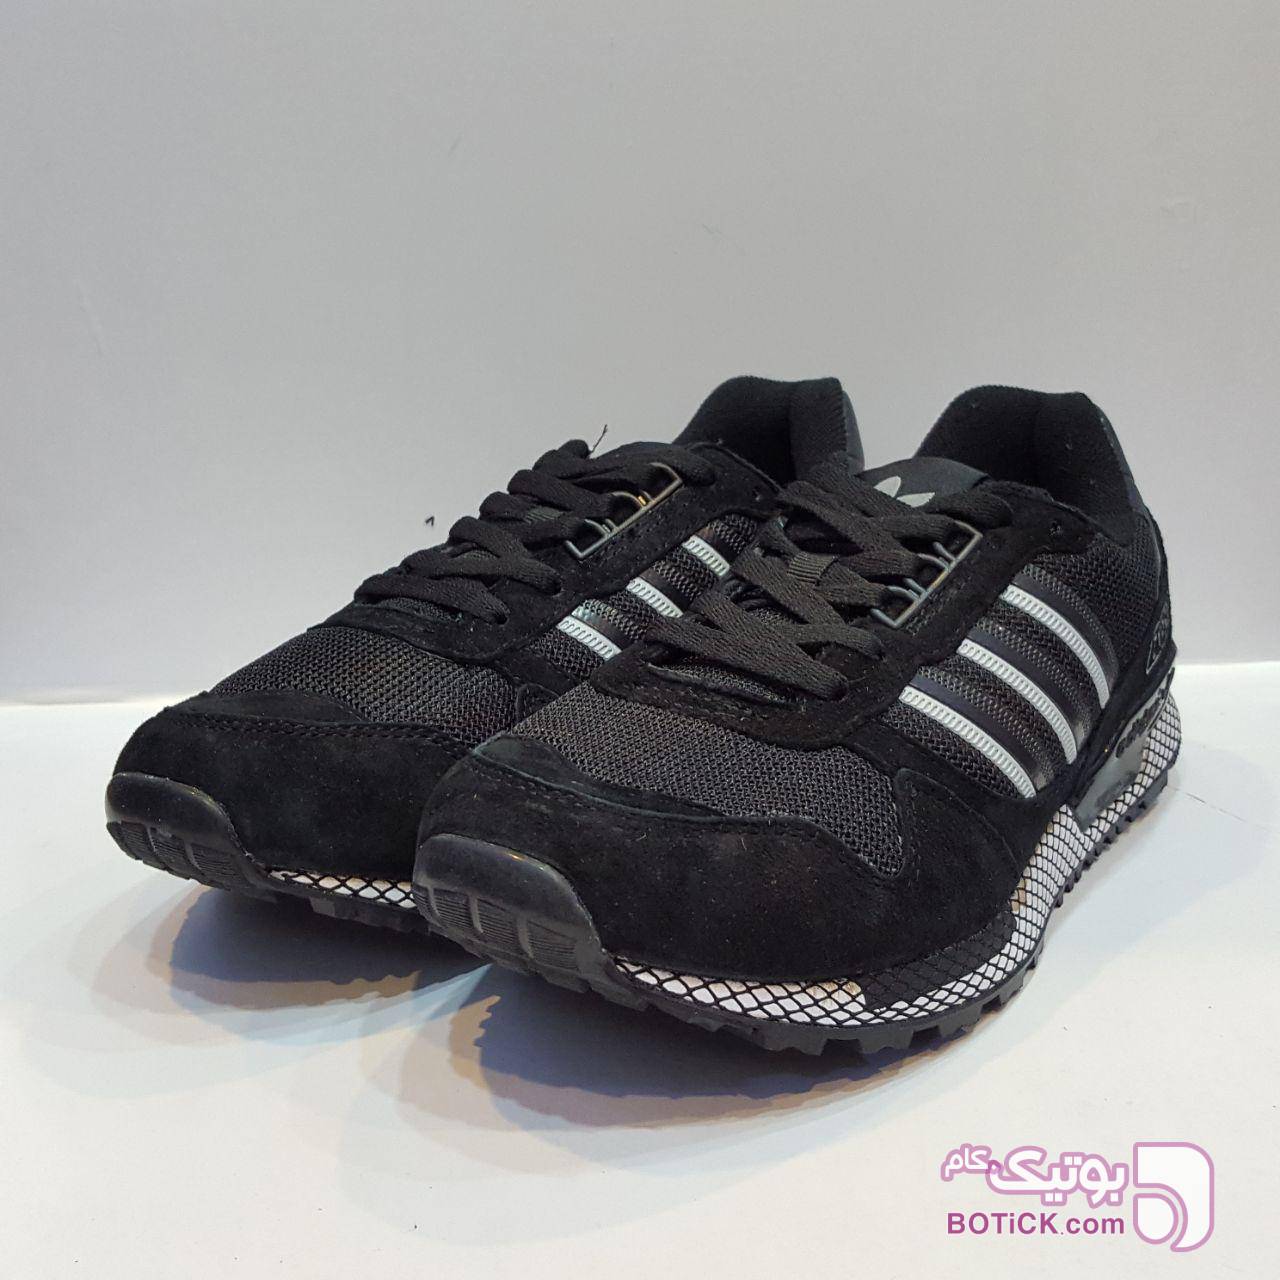 Old man jog hobby کفش آدیداس زد ایکس 950 | adidas zx 950 مشکی از فروشگاه فروشگاه مدشو | بوتیک